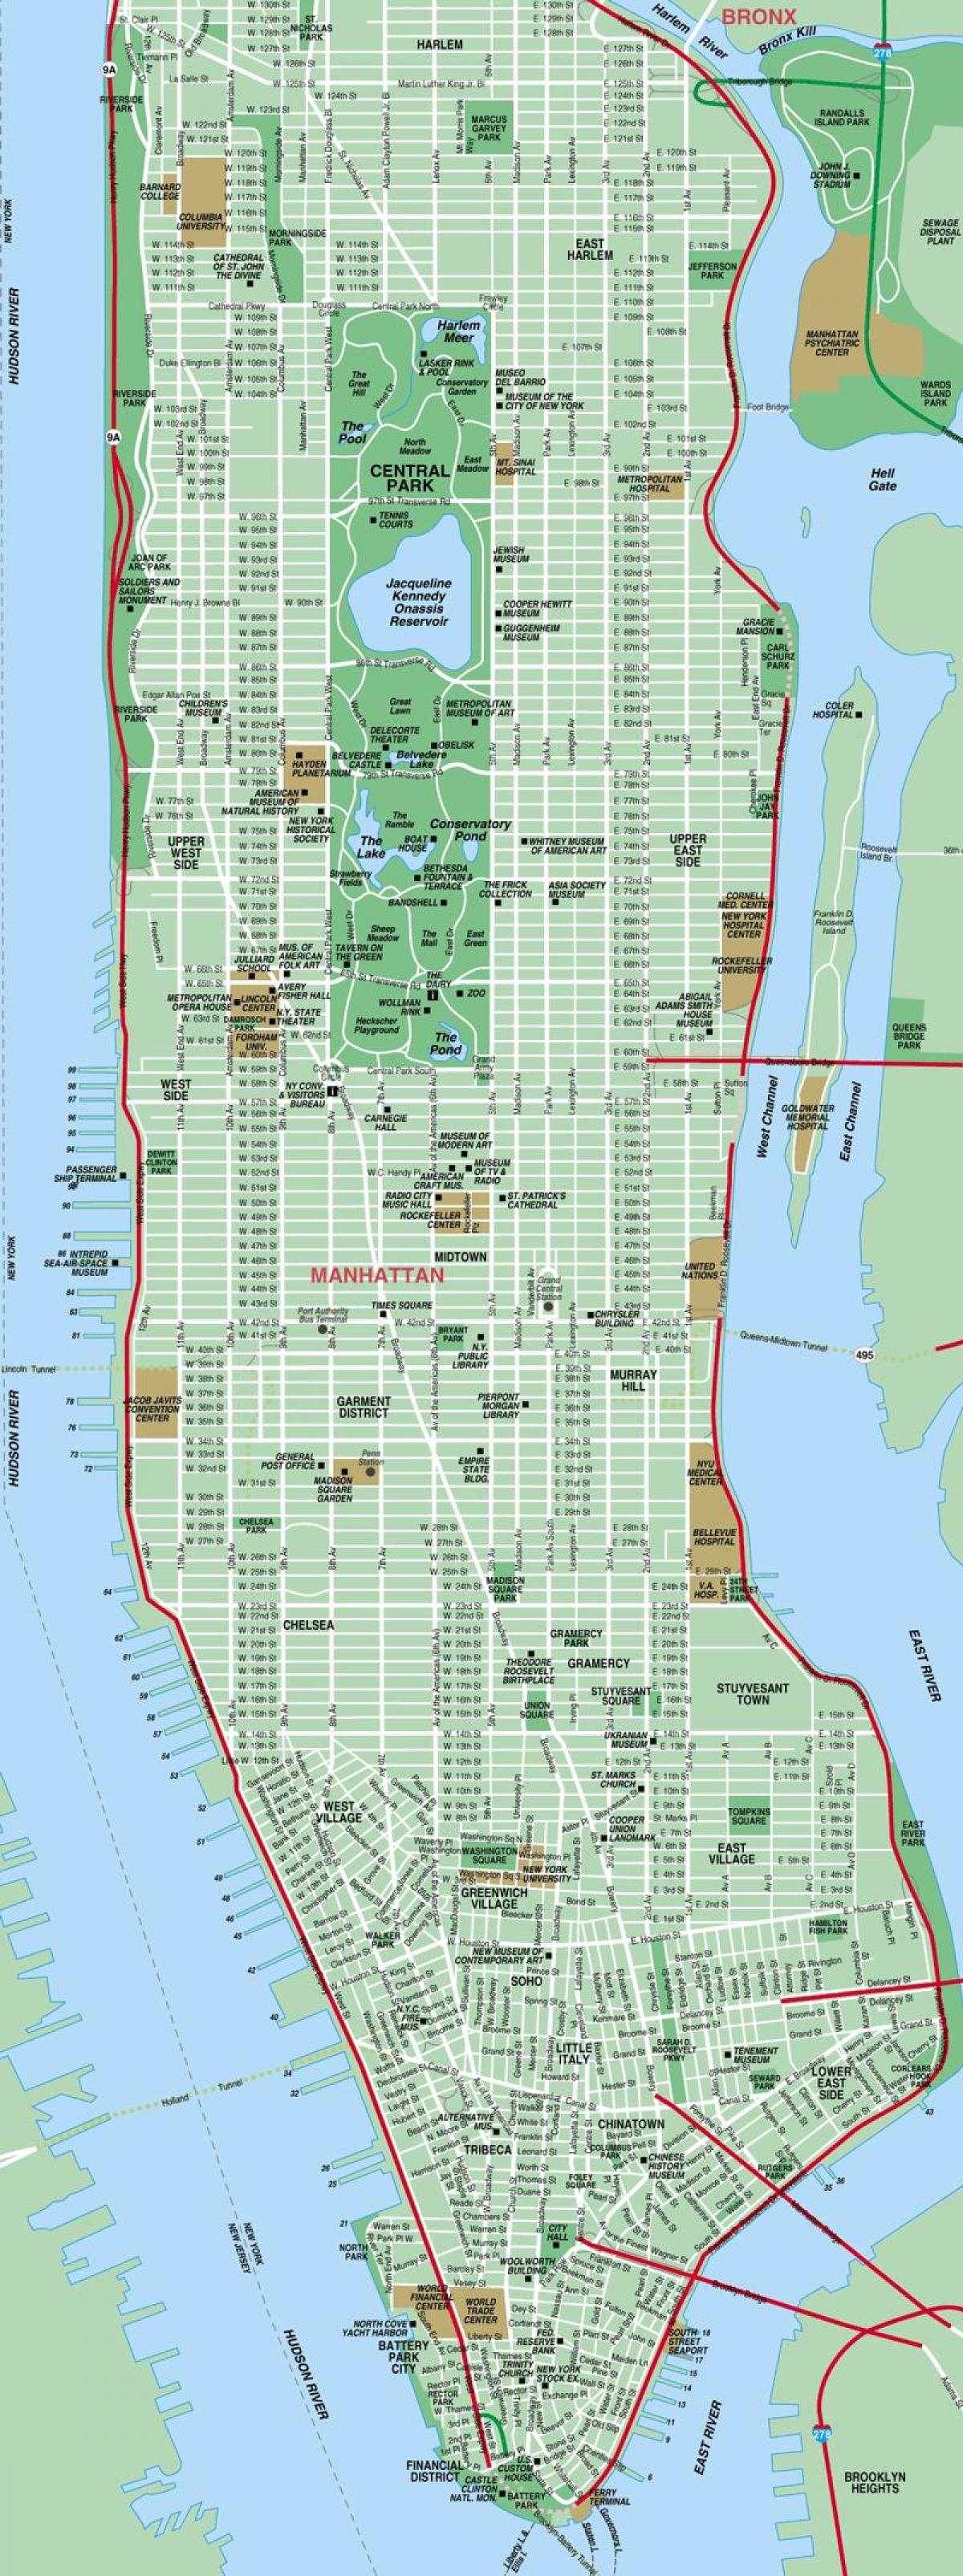 Manhattan cesty mapu